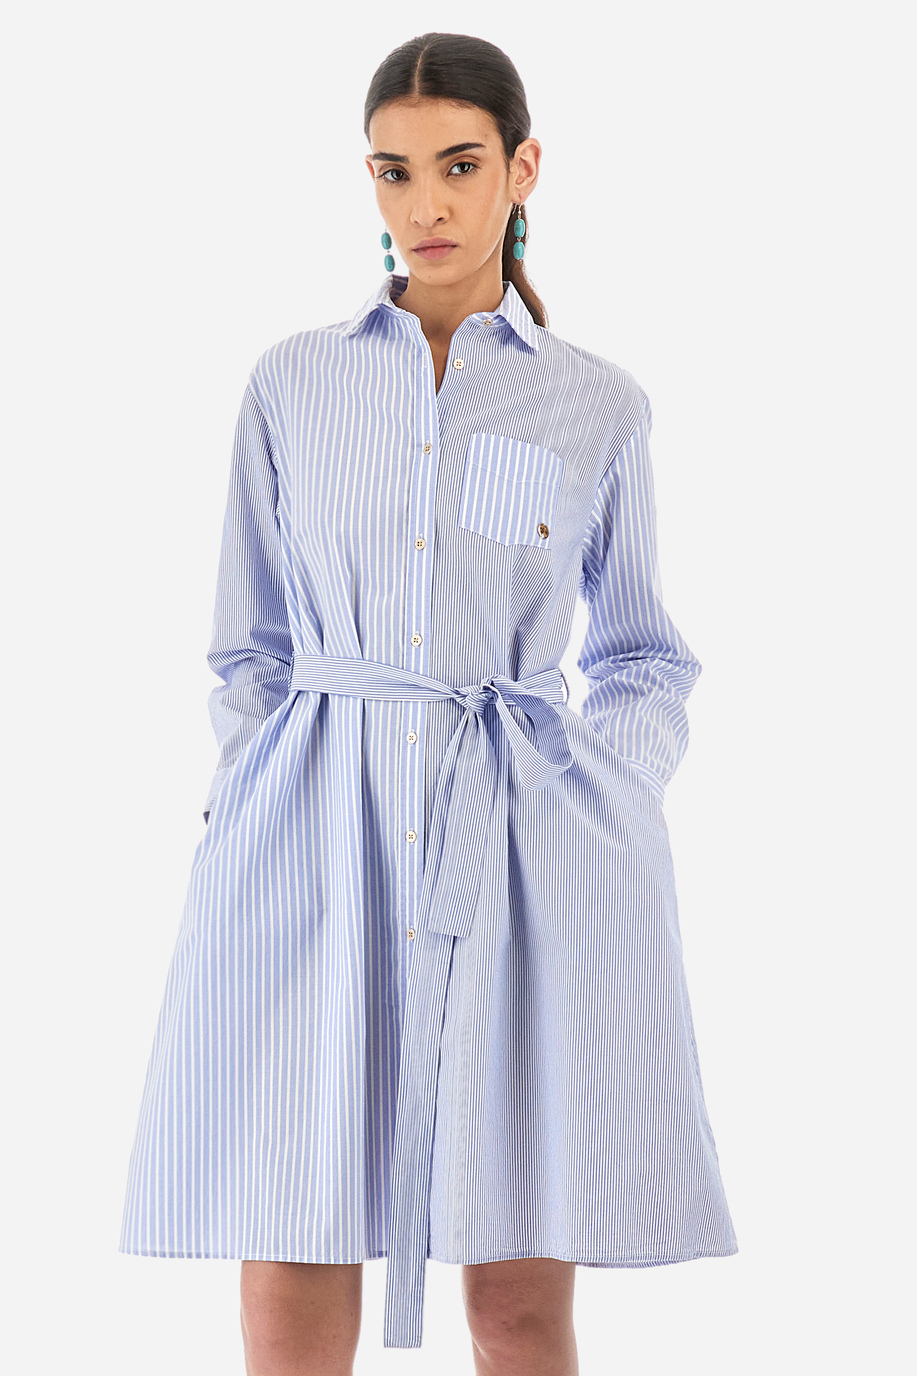 Robe en coton coupe classique - Yamini - Robes | La Martina - Official Online Shop